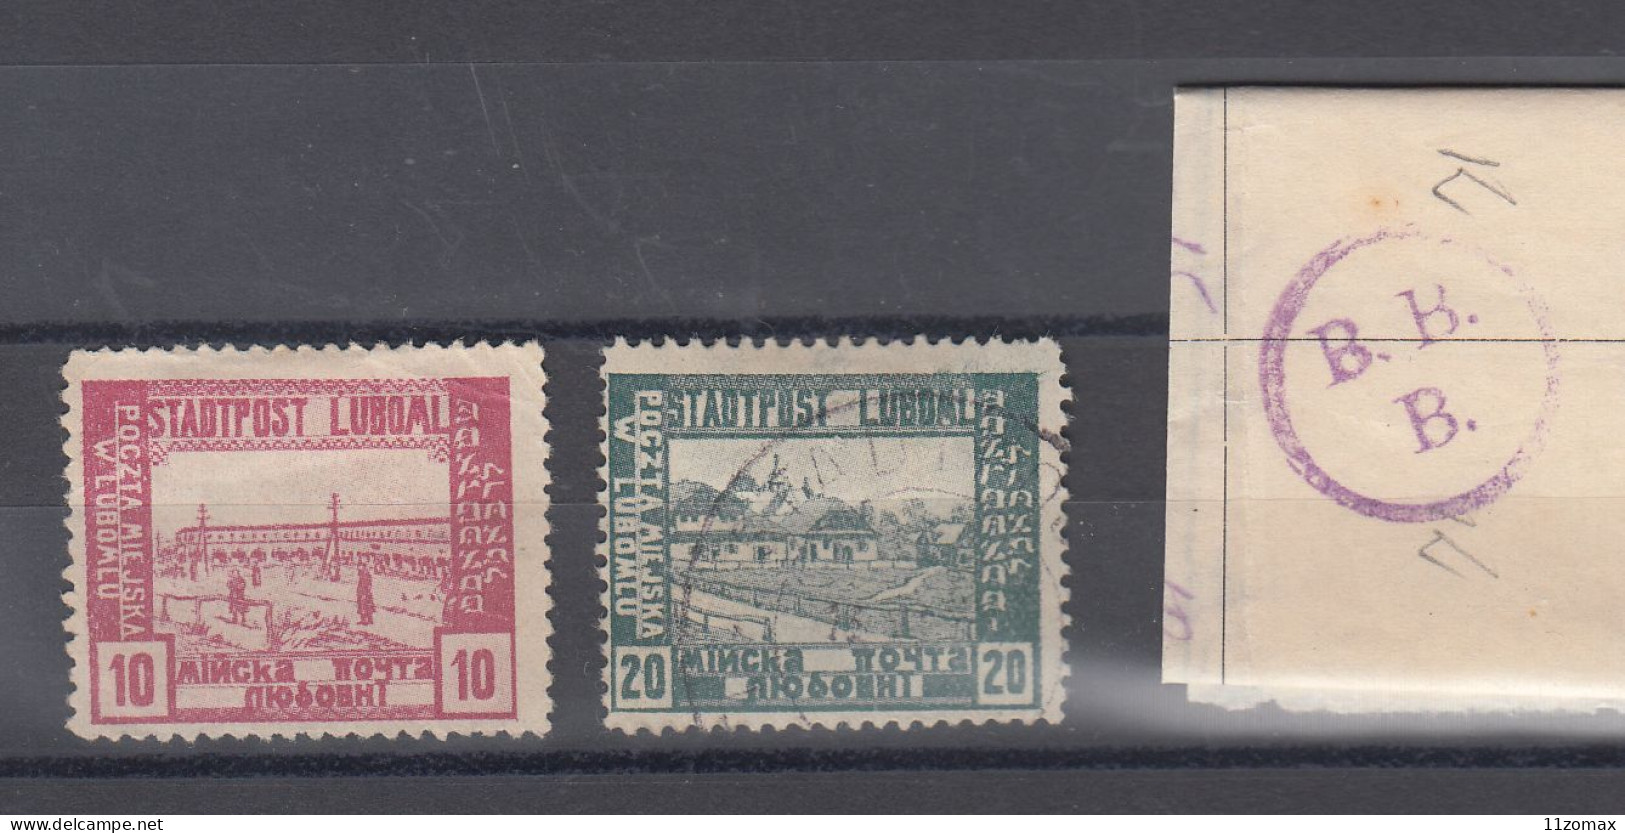 LUBOML LYUBOML Ukraina Now 1918. Lot Of 2 Stamps - VIPauction001 - Unused Stamps